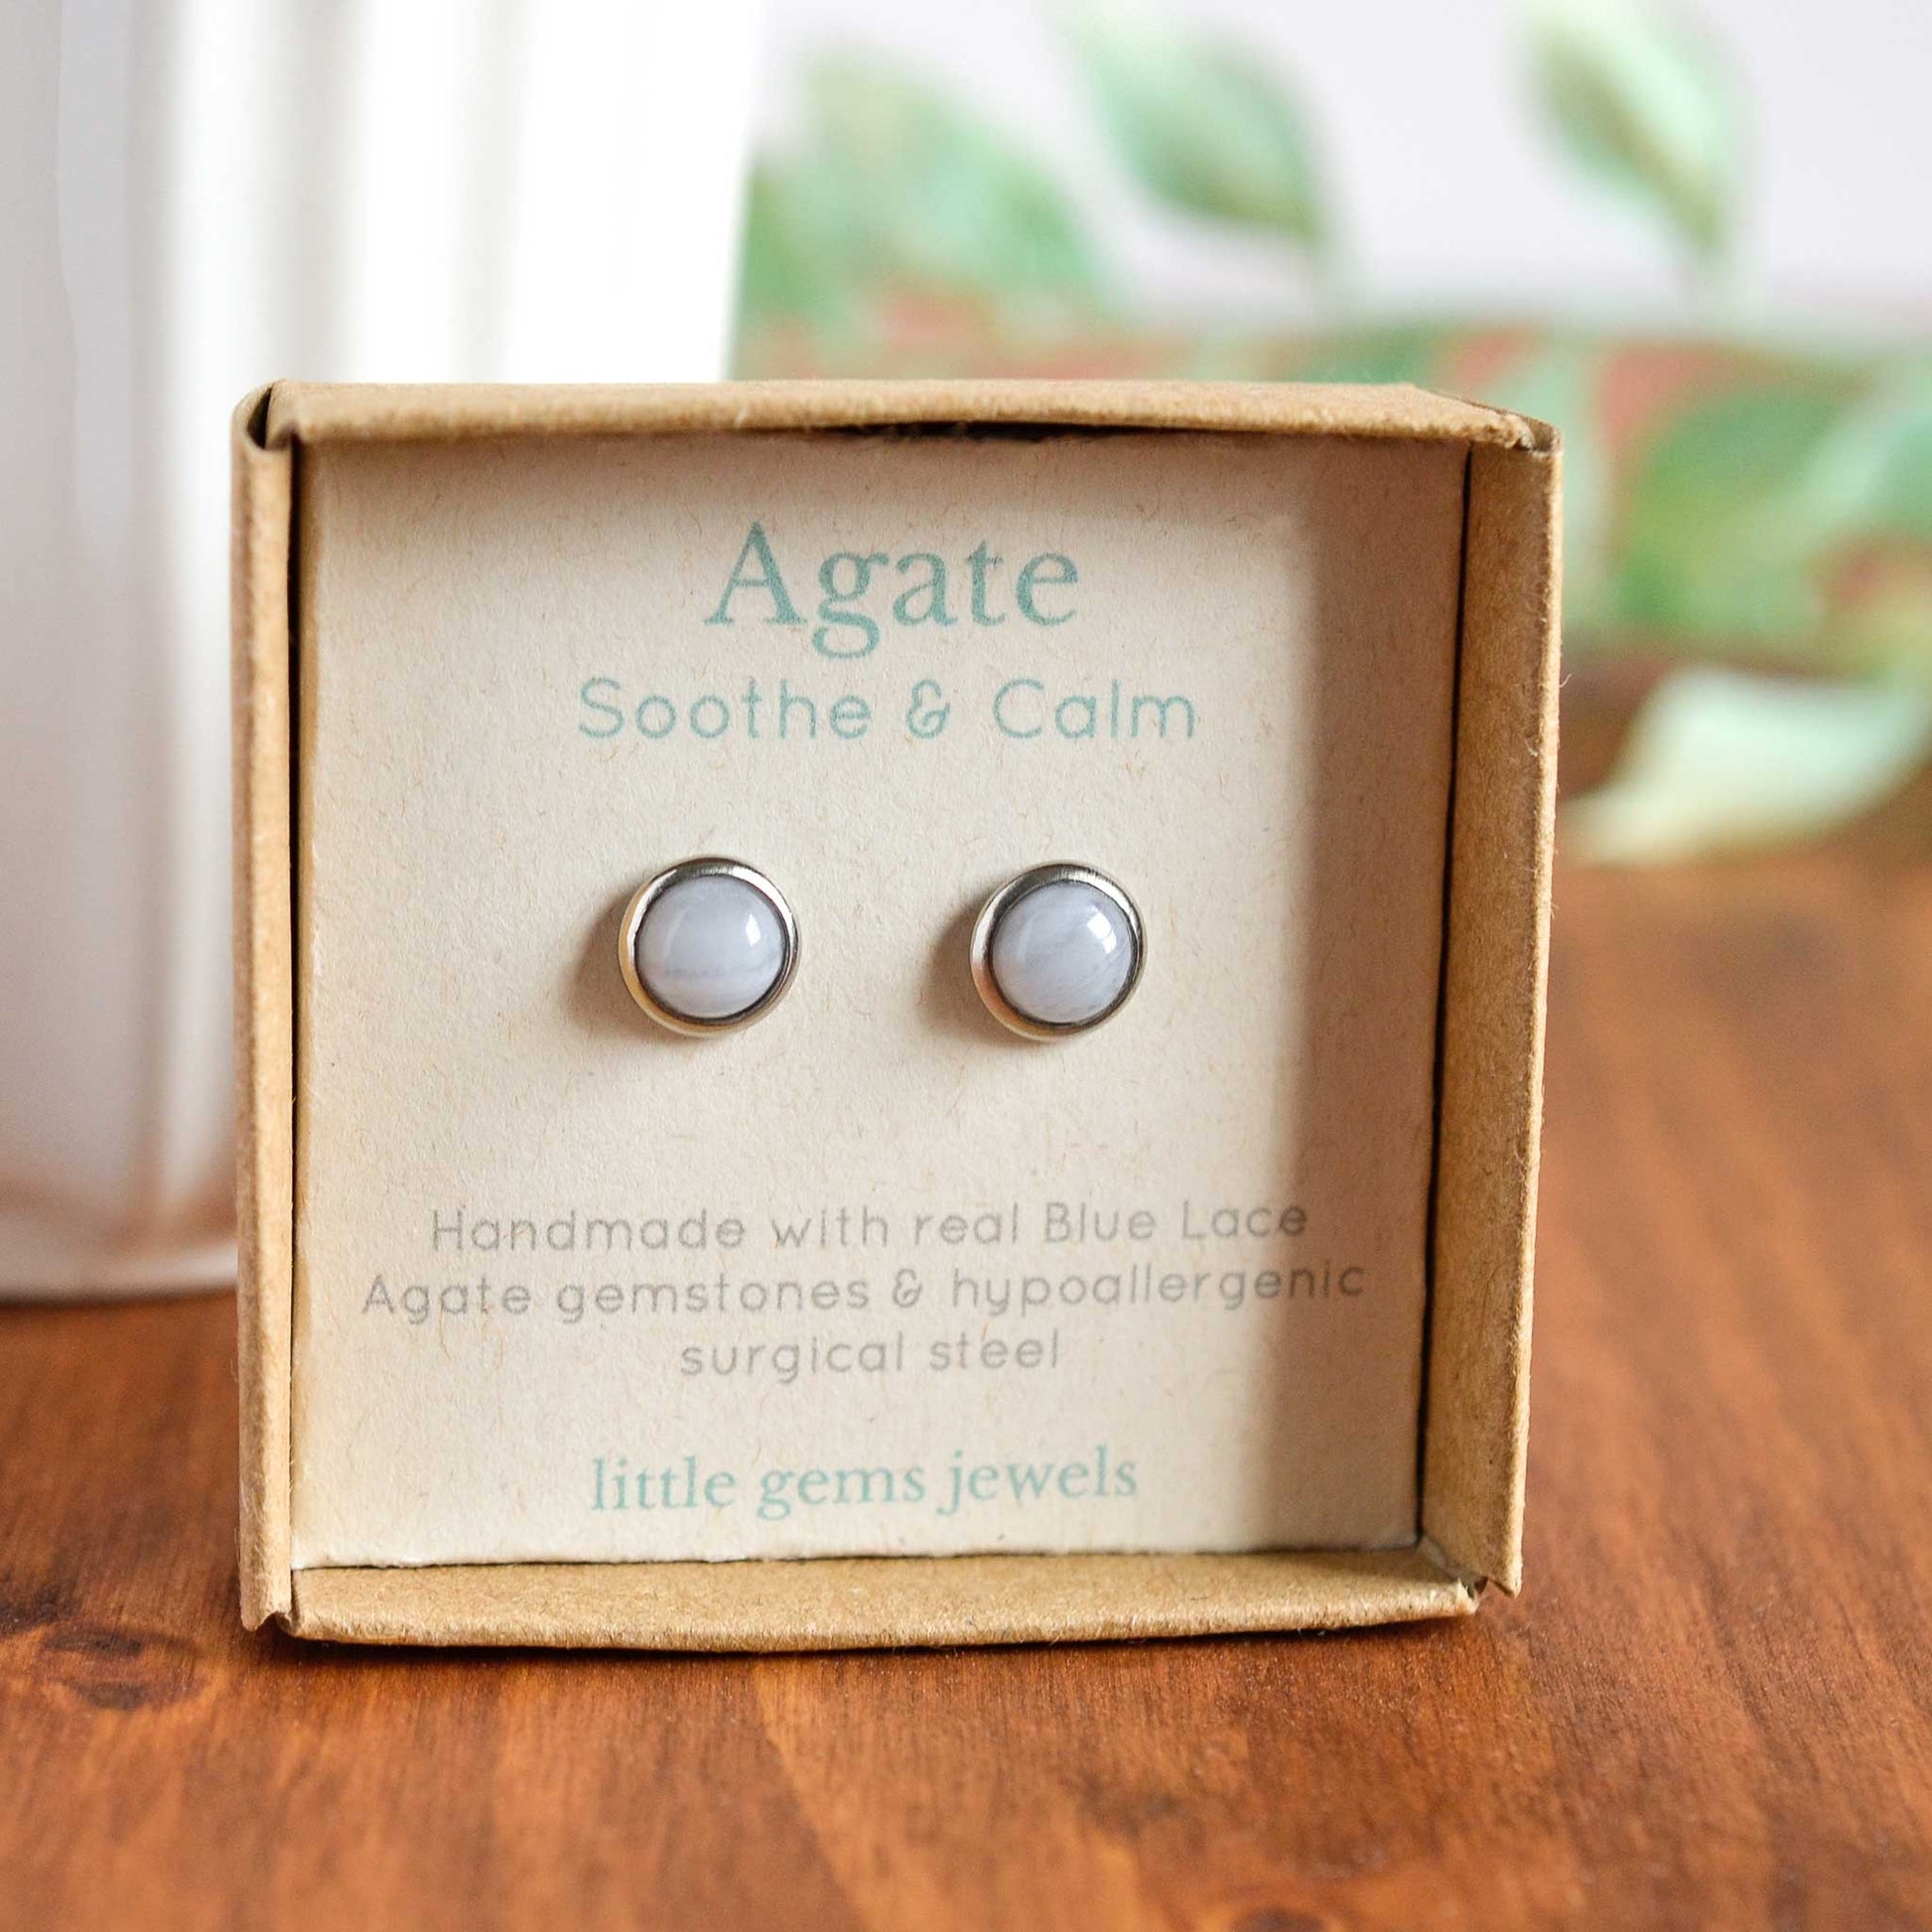 Blue Lace Agate gemstone stud earrings in gift box